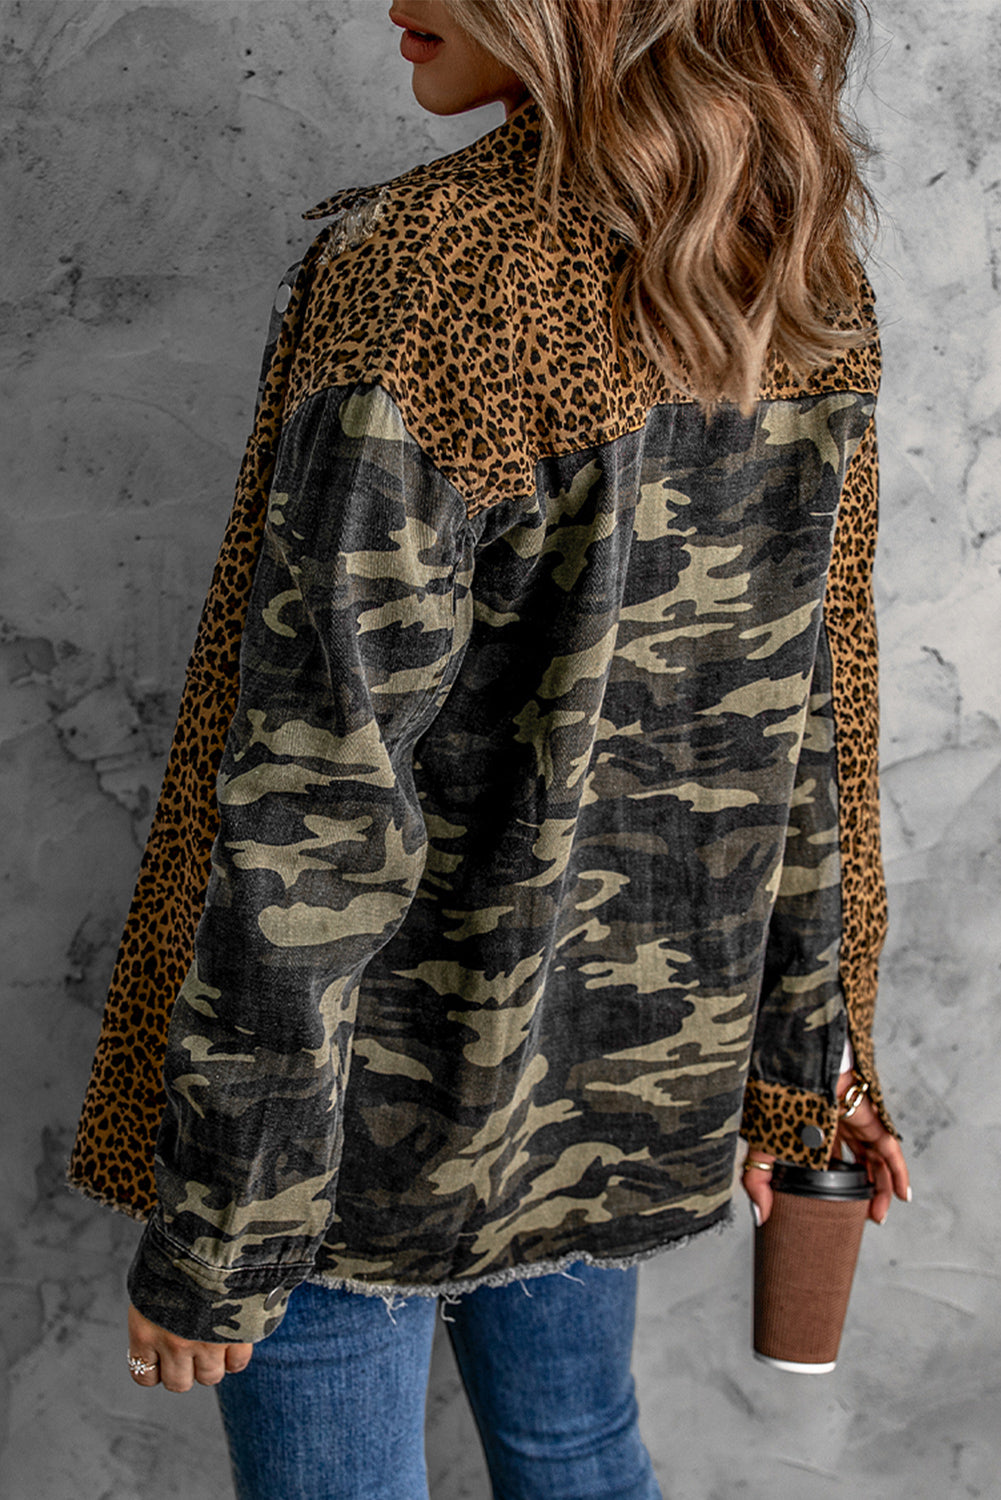 Leopard Camouflage Patchwork Jacket